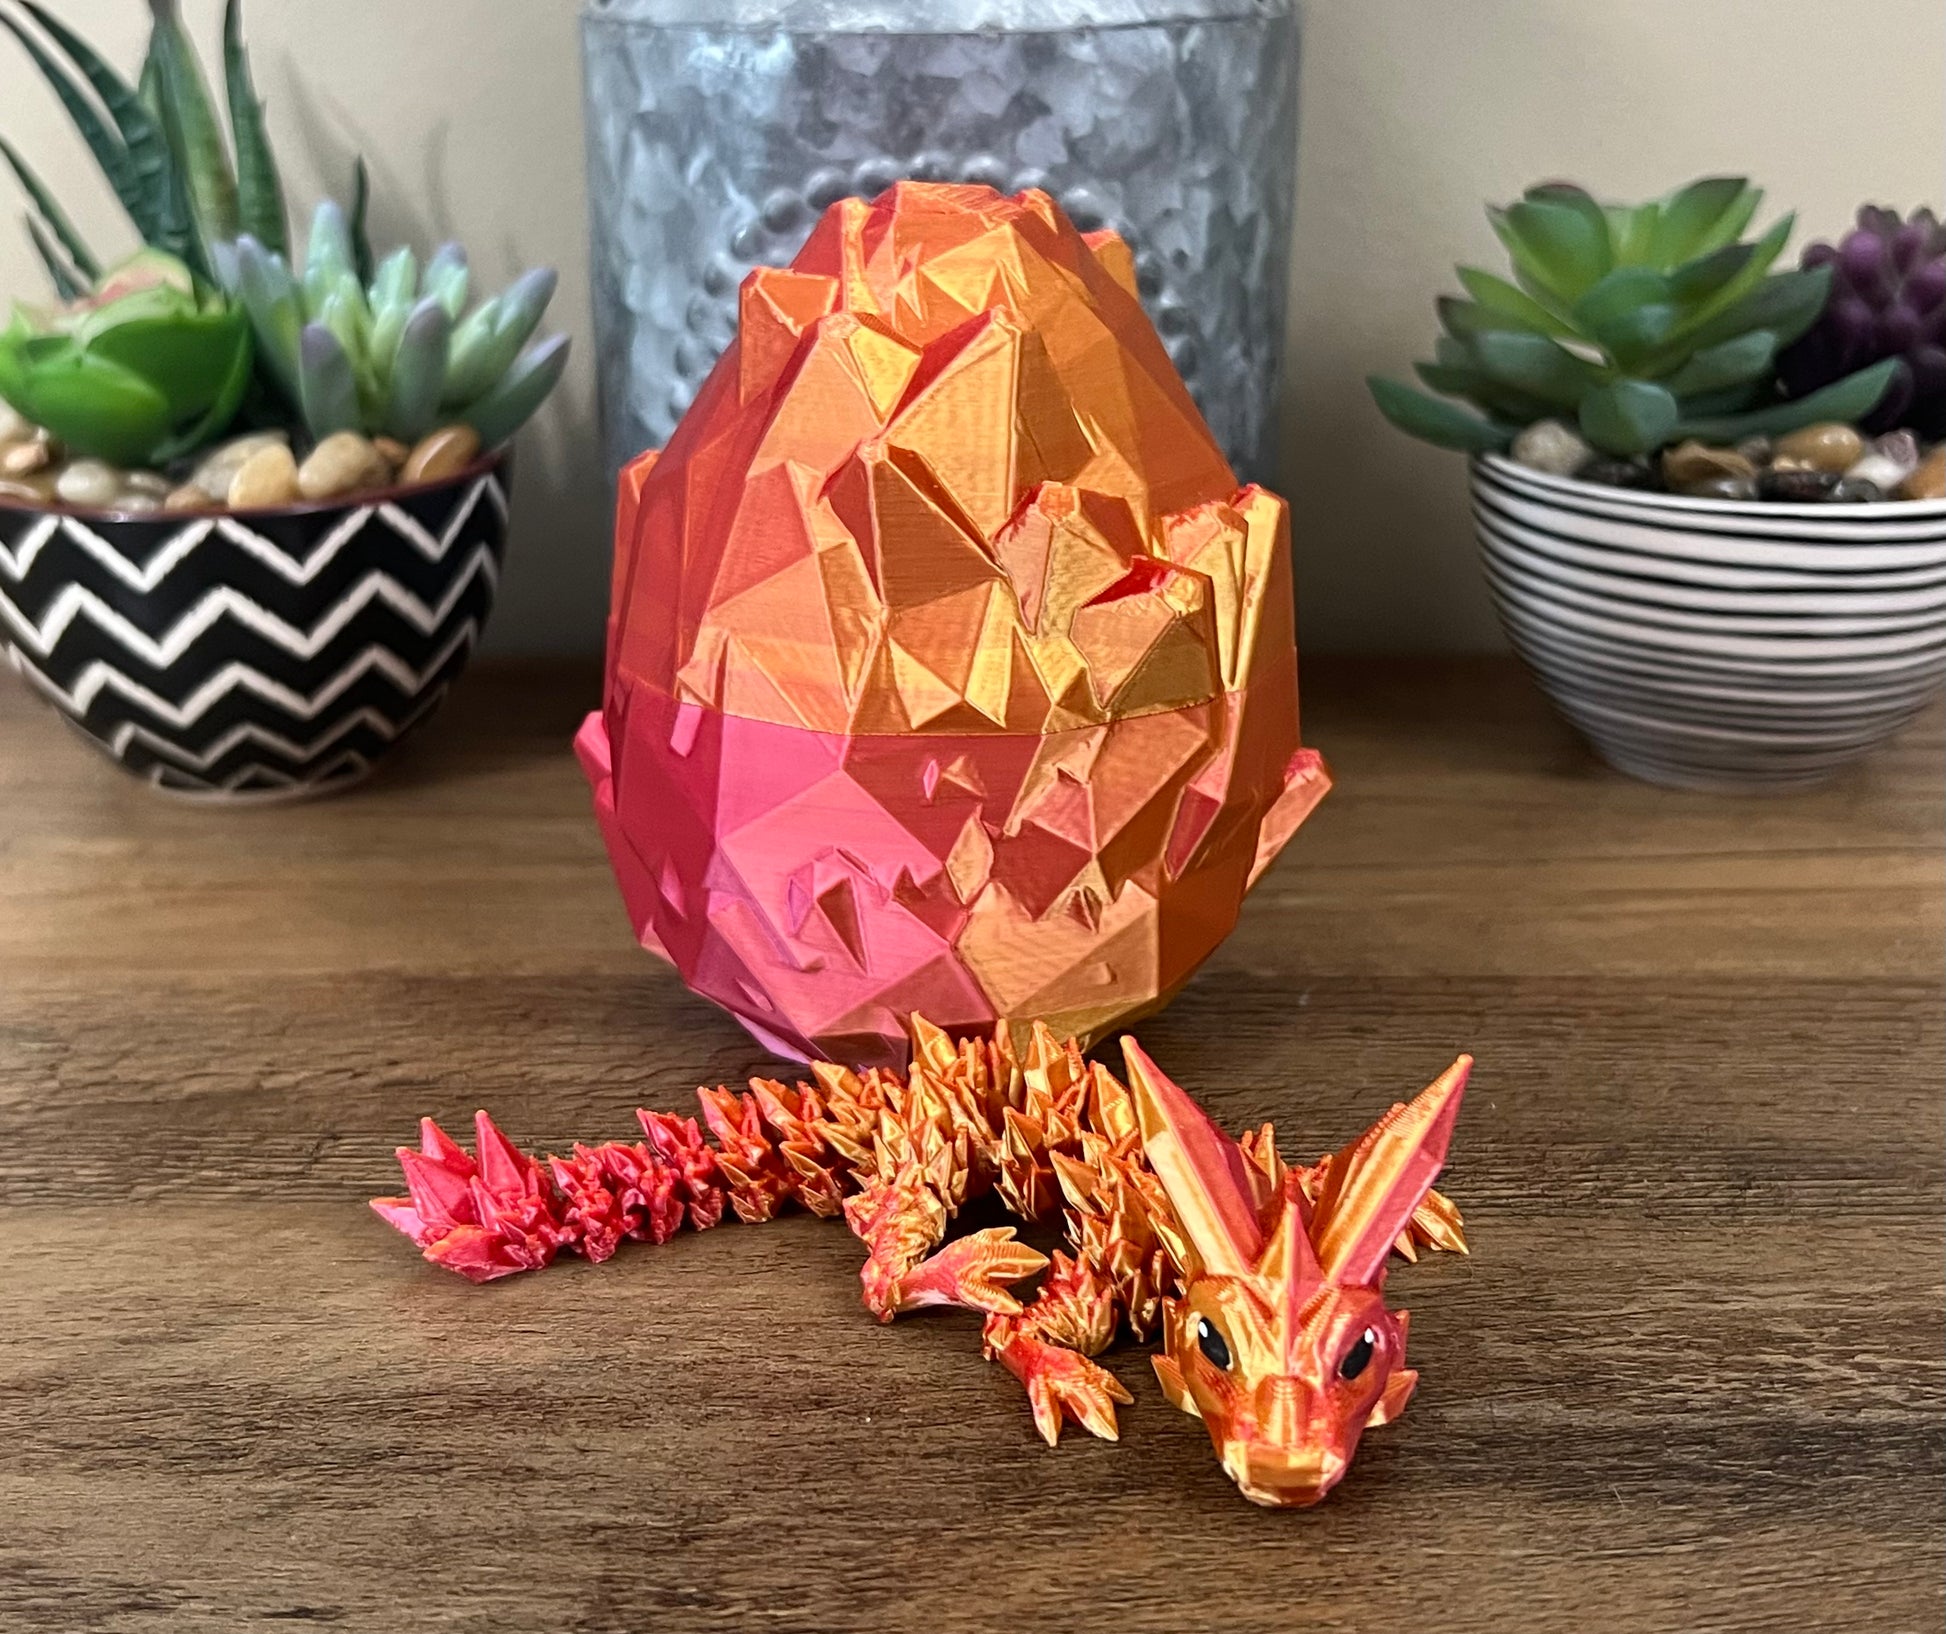 Rhohey Baby Dragons, Dragon Egg, Articulated Baby Crystal Dragon